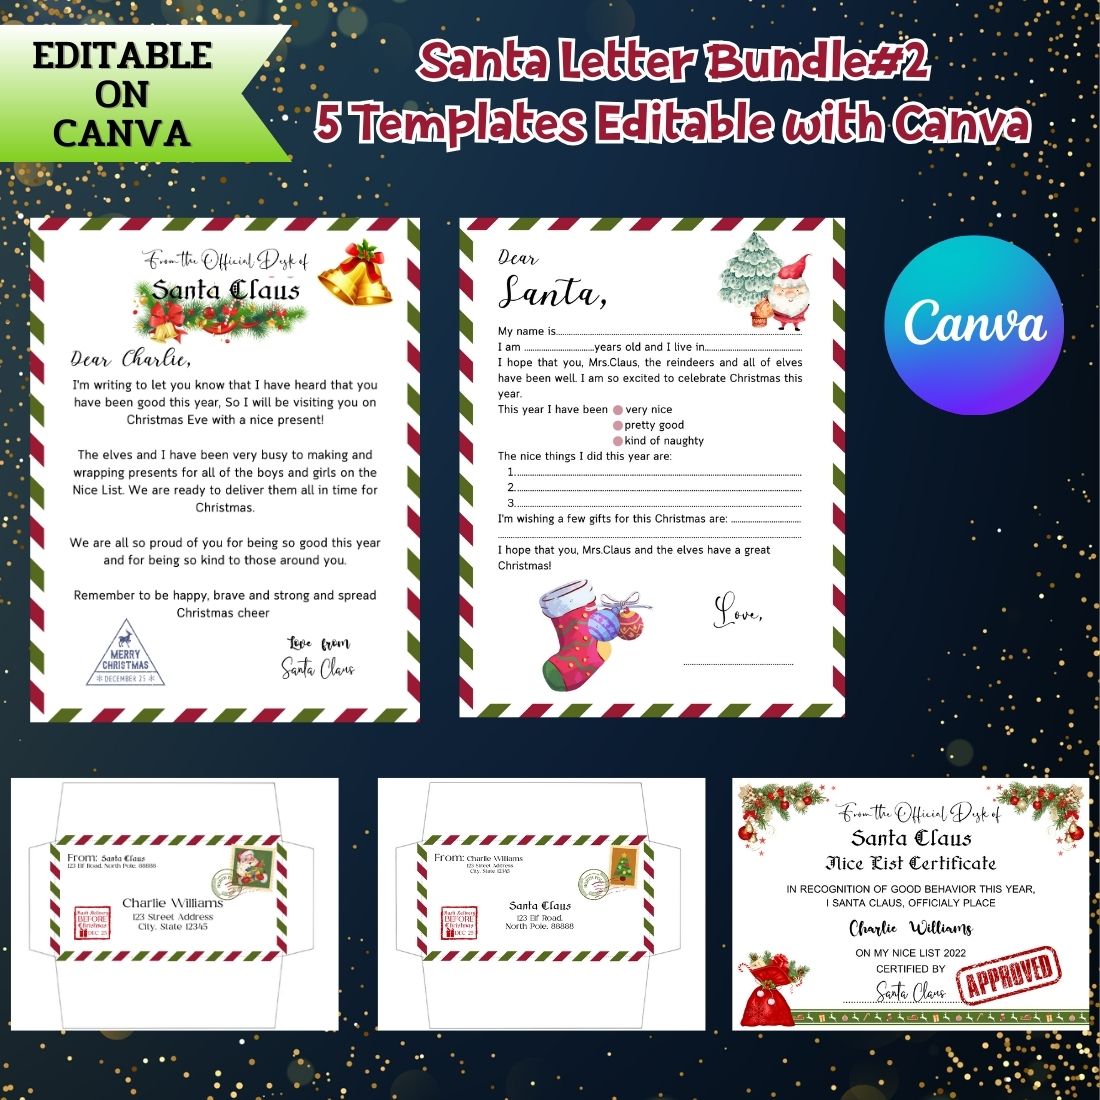 Santa Letter Bundle | Editable by Canva cover image.